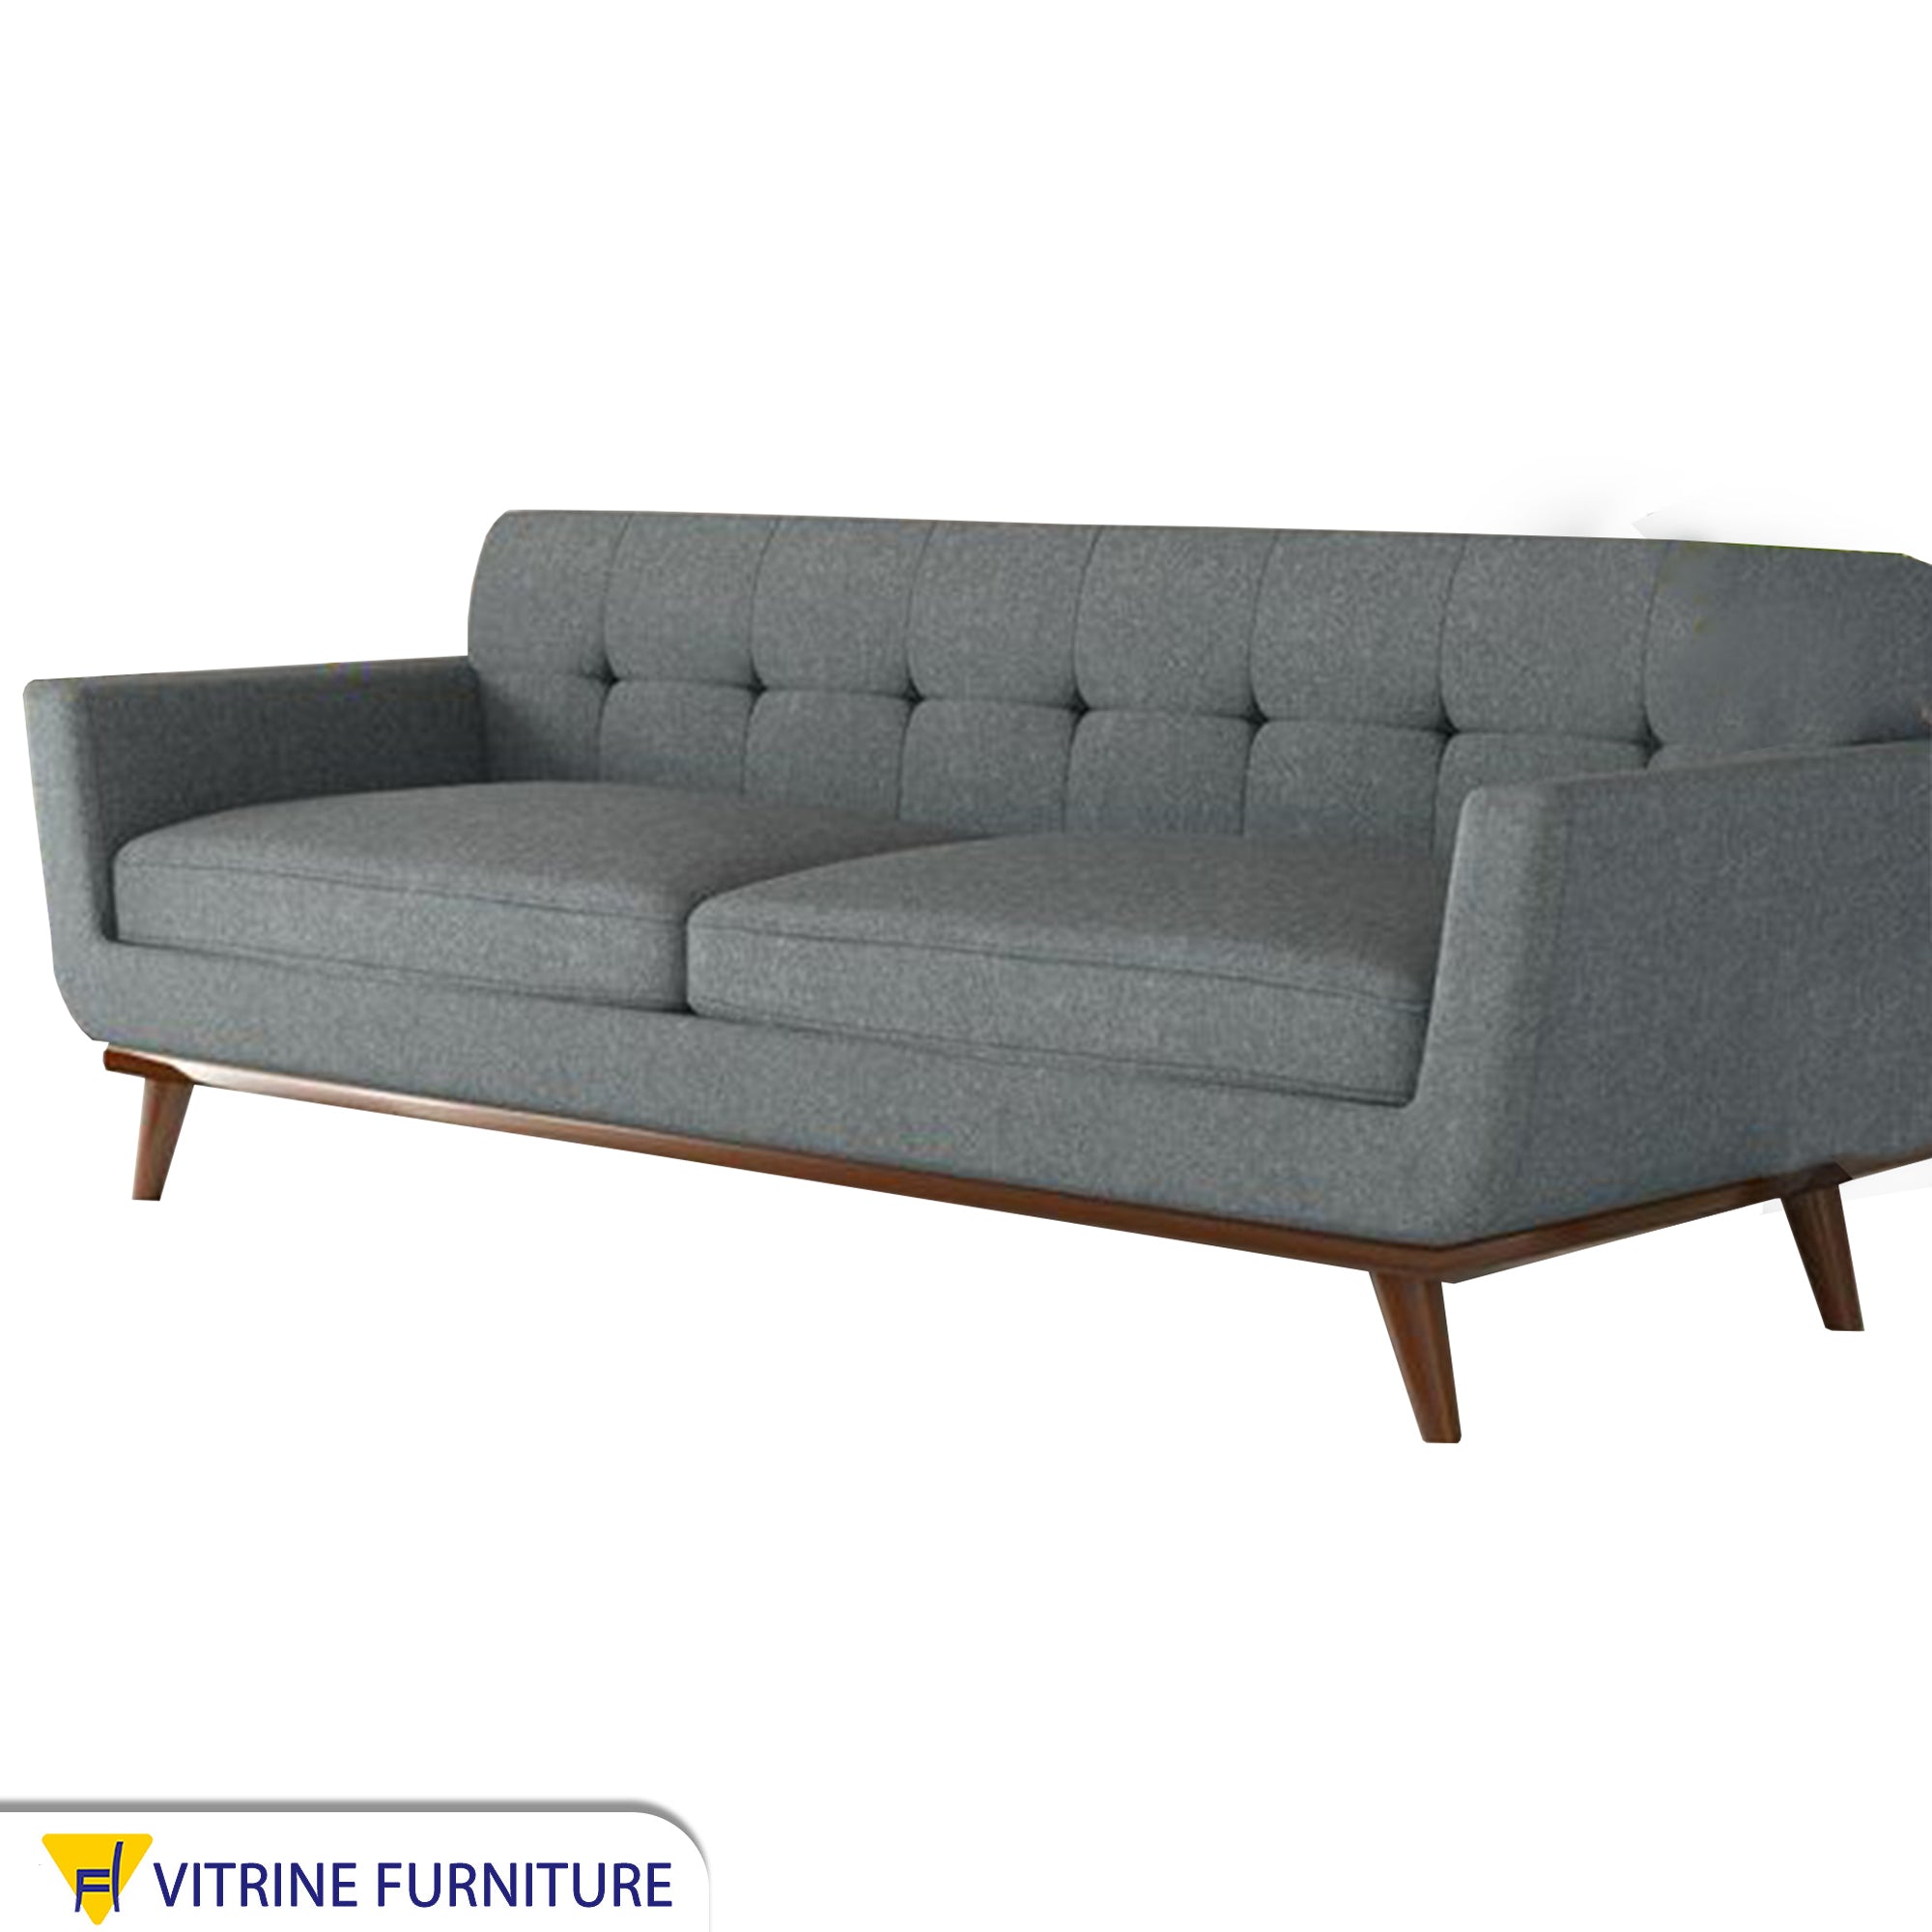 Gray sofa with slanted legs